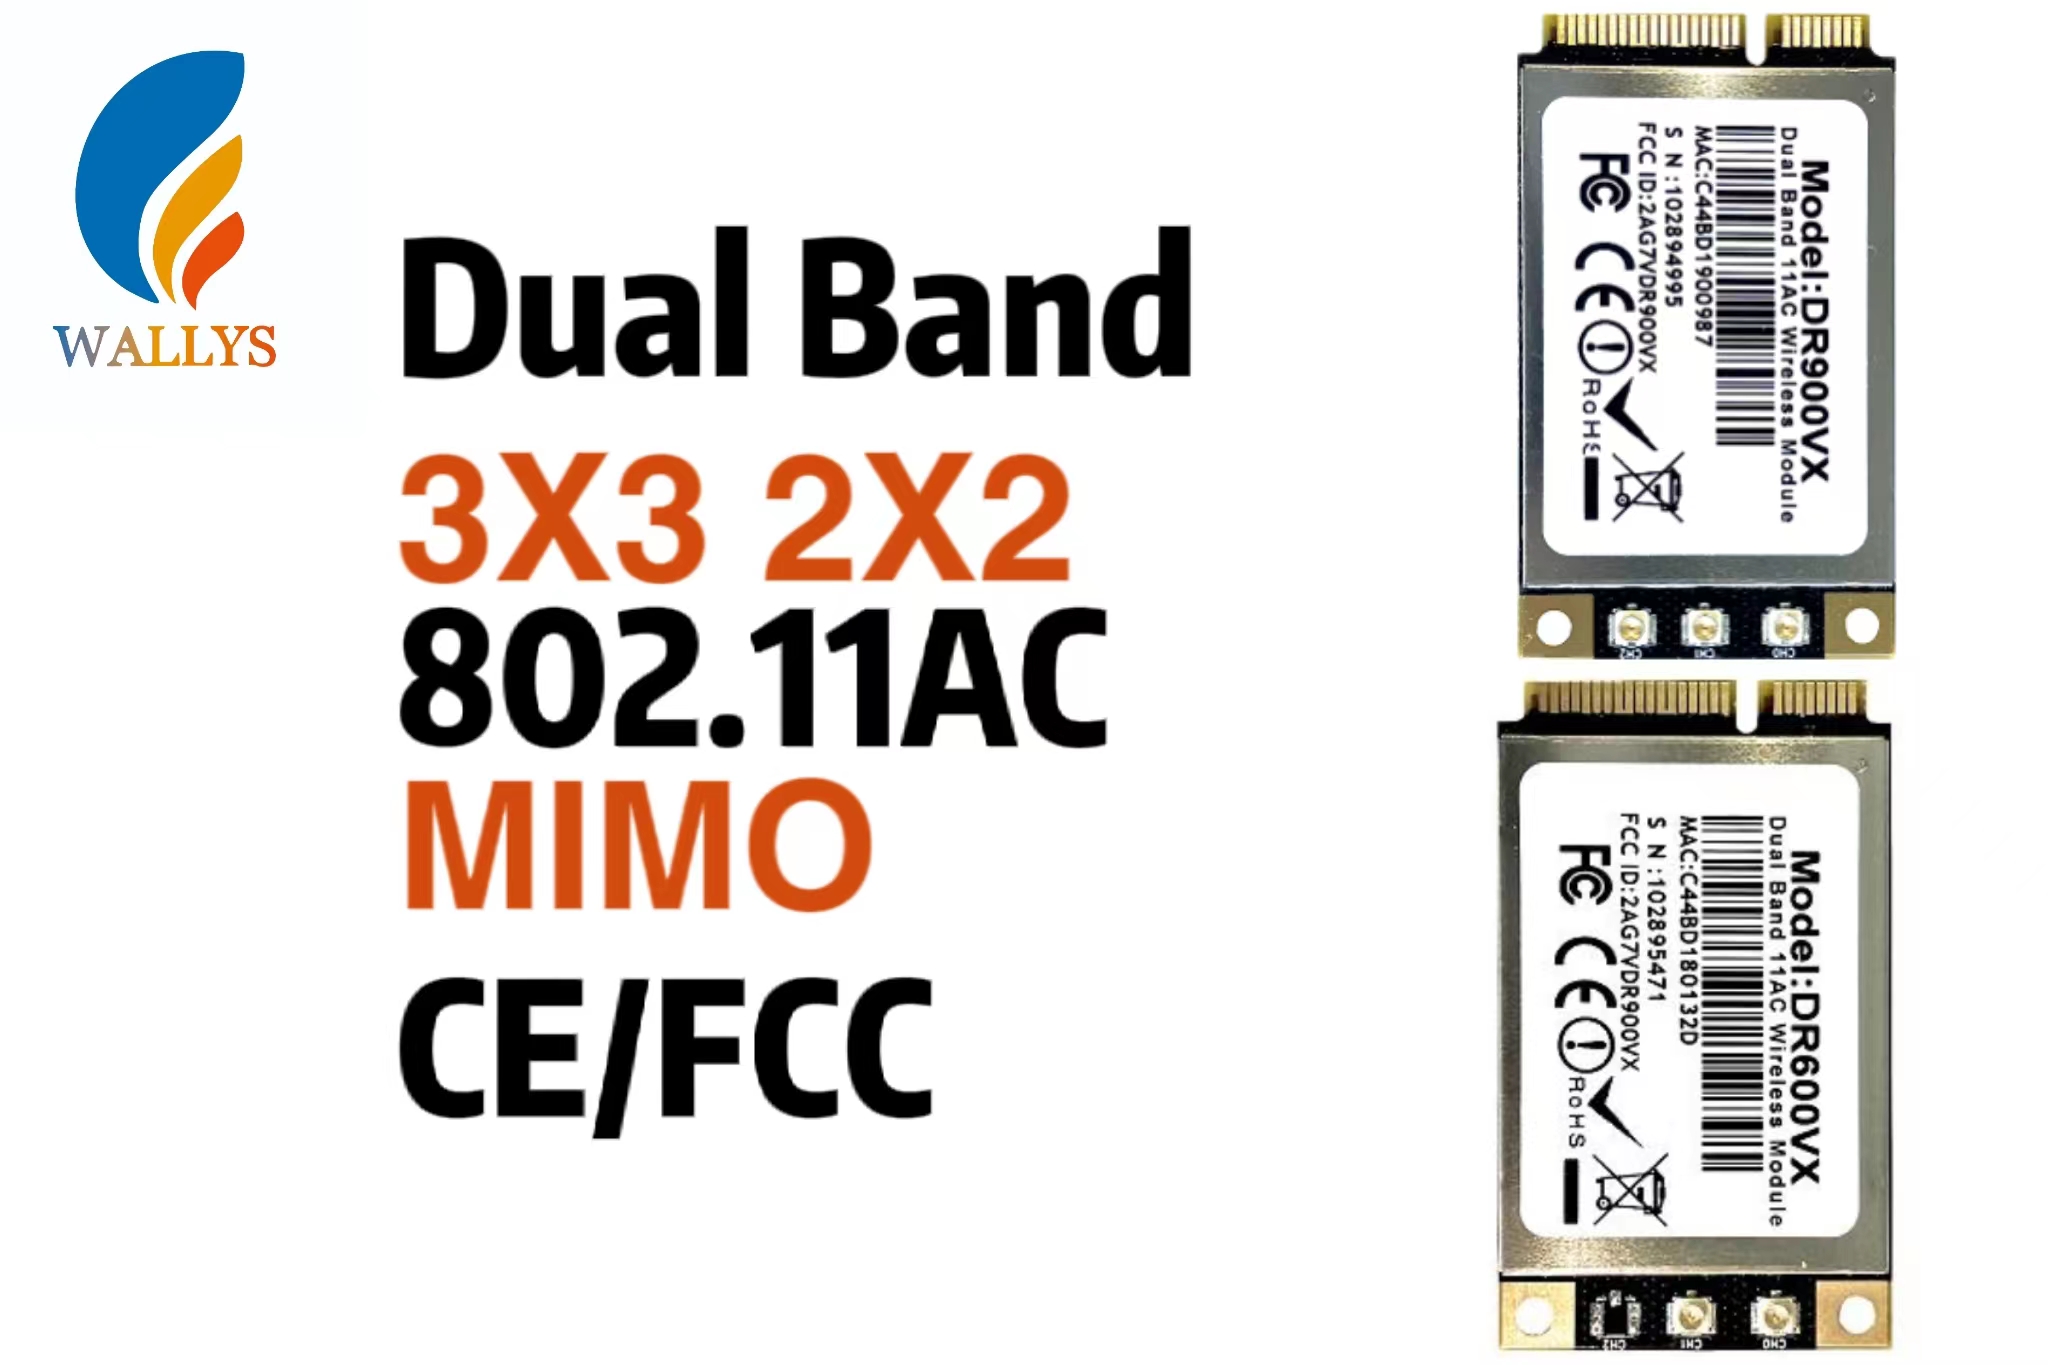 QCA9880 WIFI5 802.11AC Dual Band MiniPCIe Network Card CE FCC|Wallystech